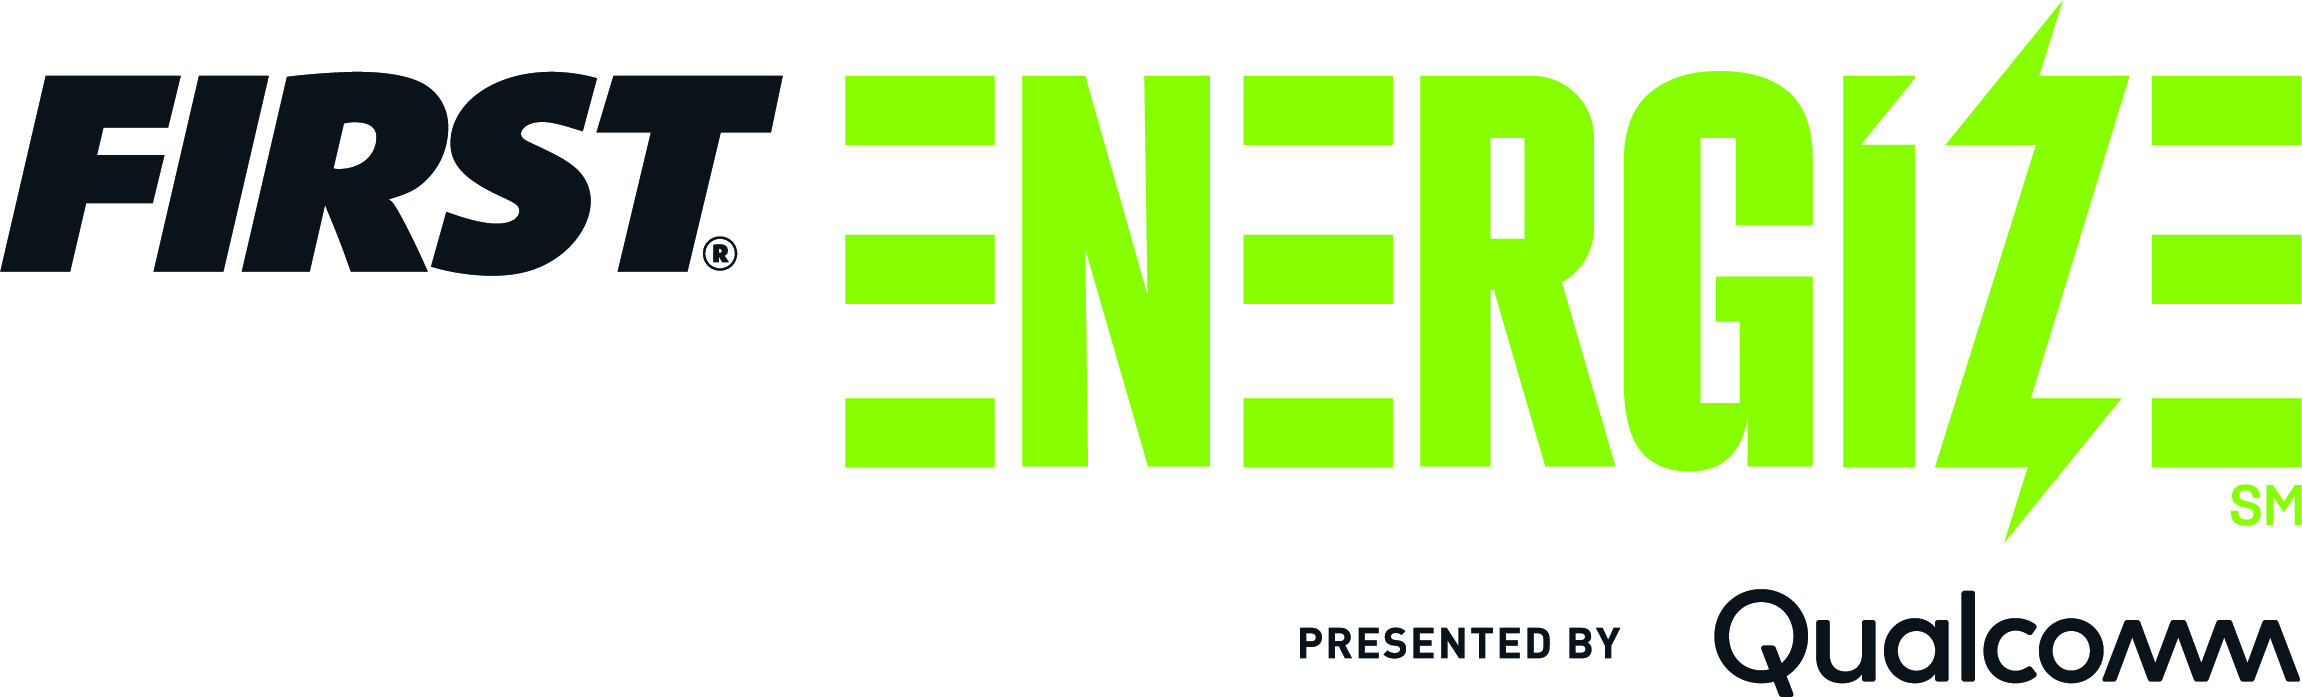 Energize logo